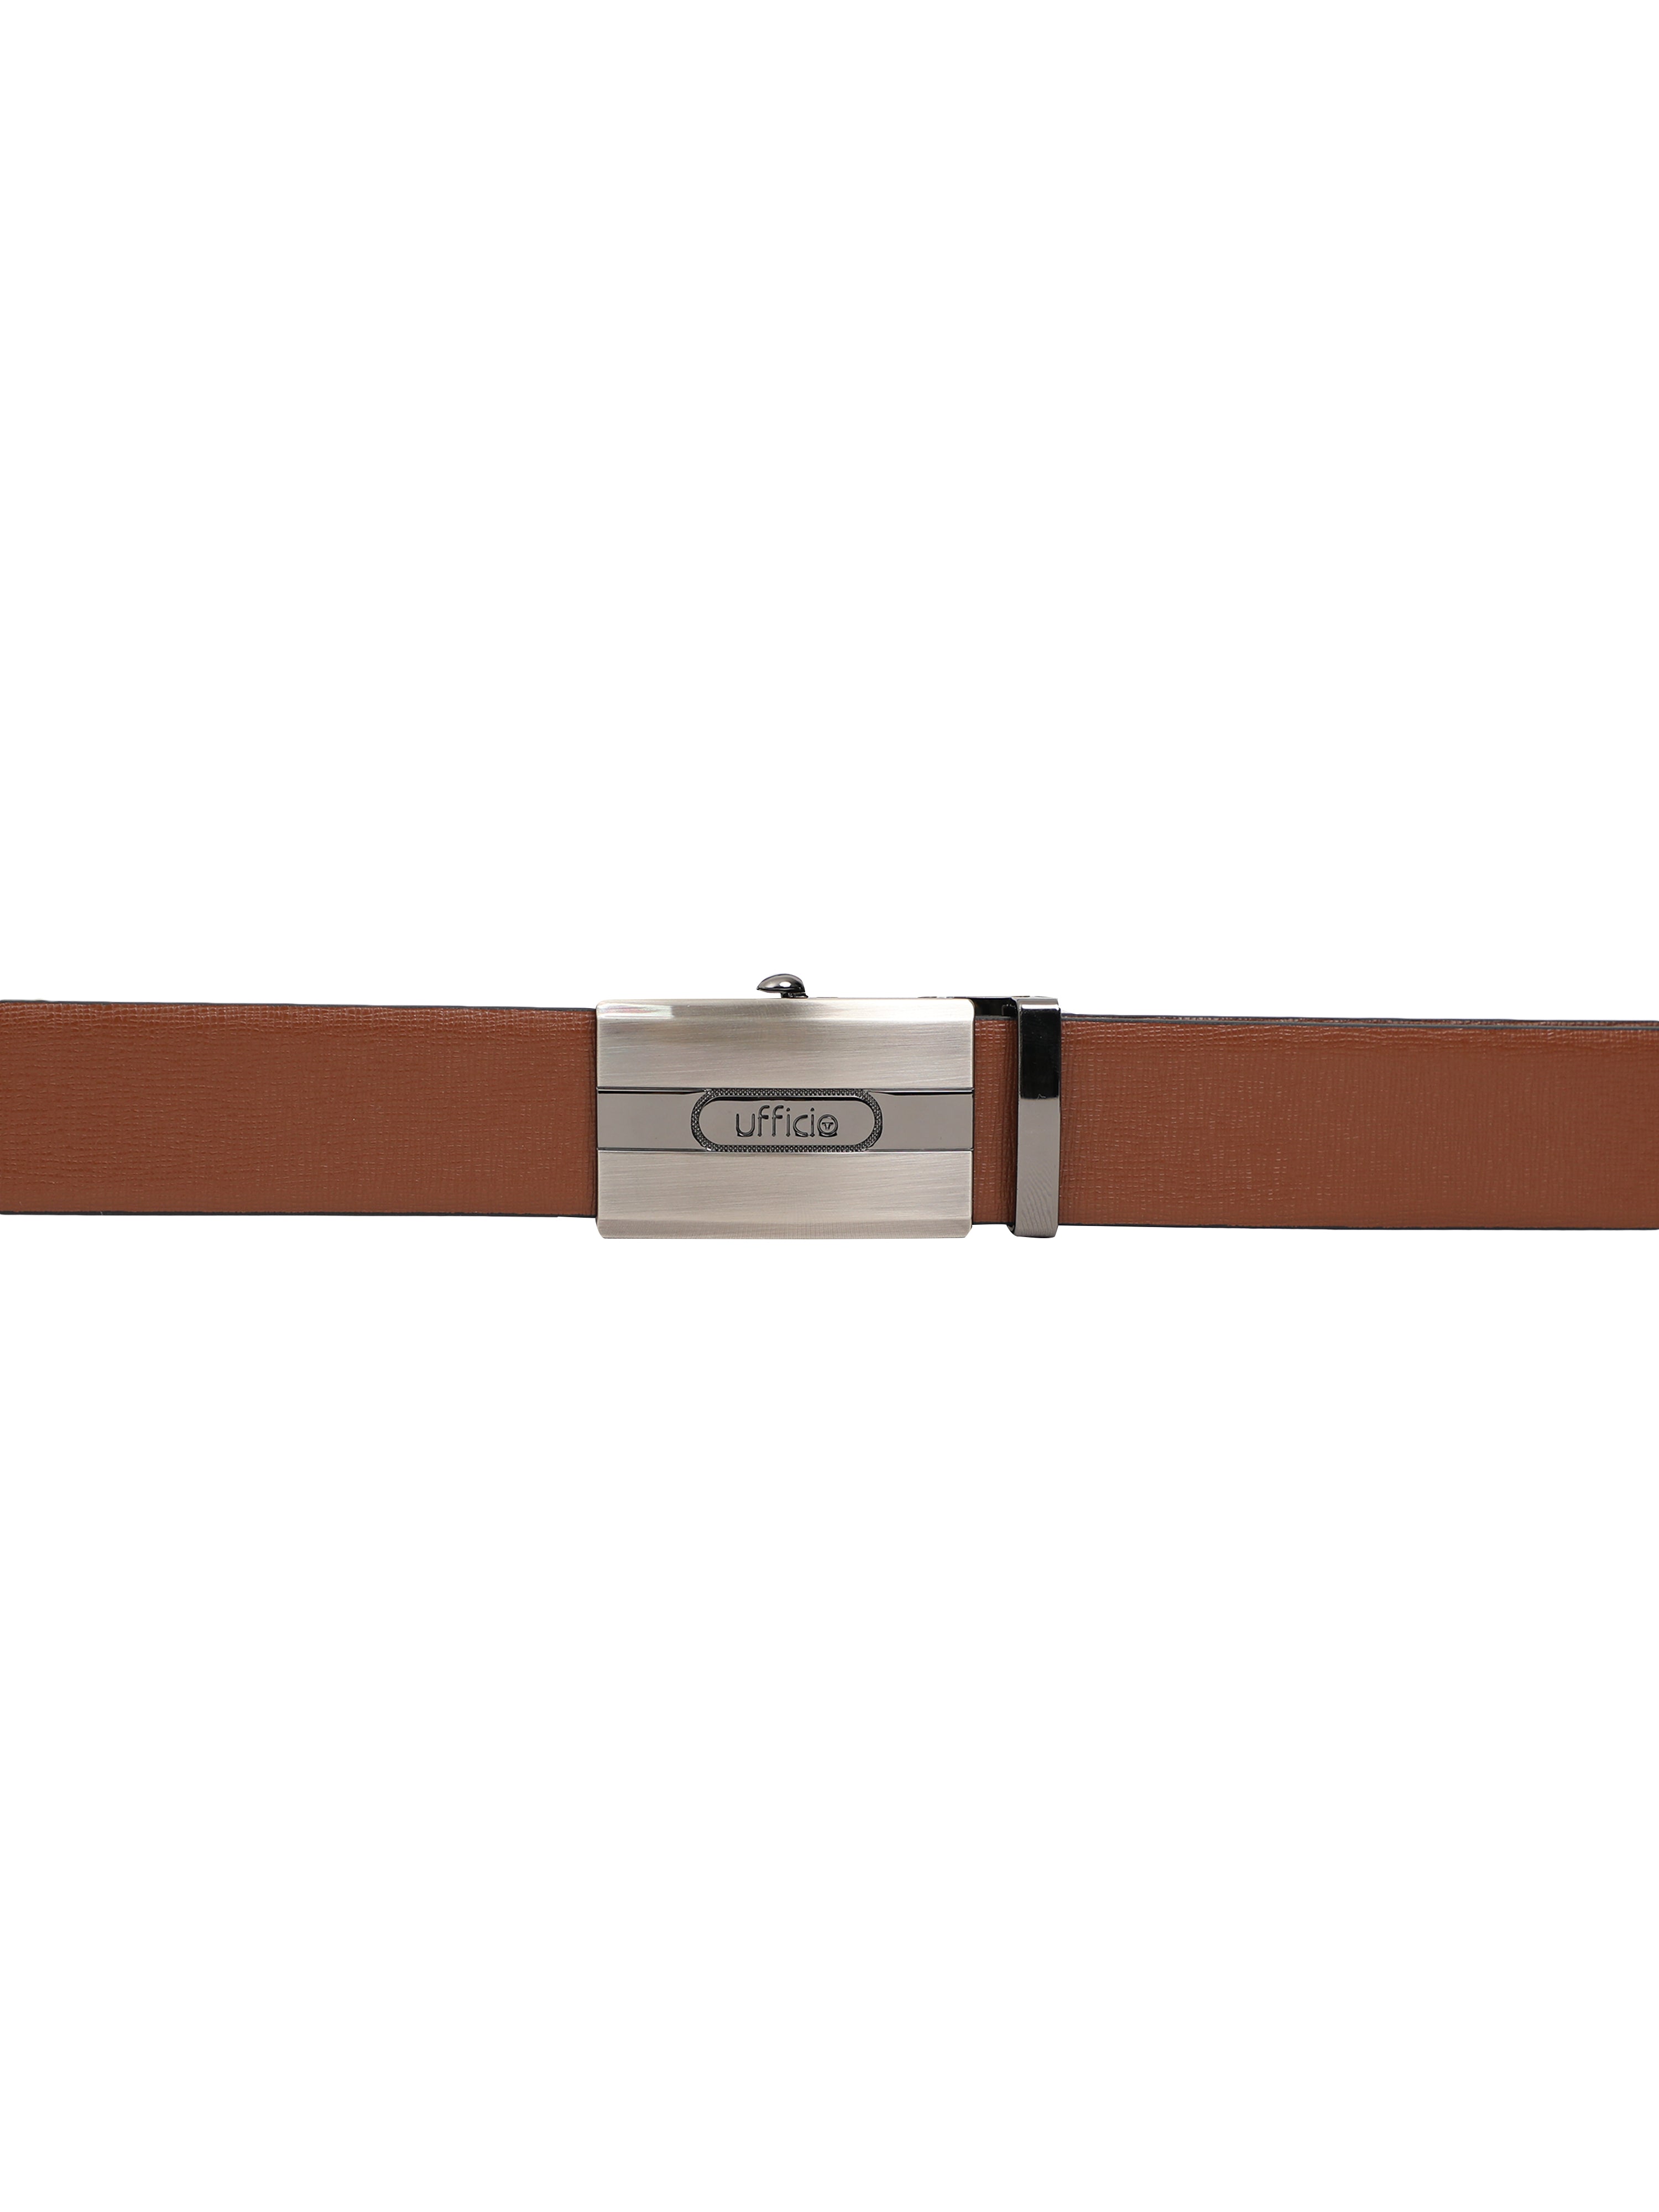 Ufficio Men's Genuine Leather Belt | Reversible Auto Lock | Tan/Black | UFF2111B